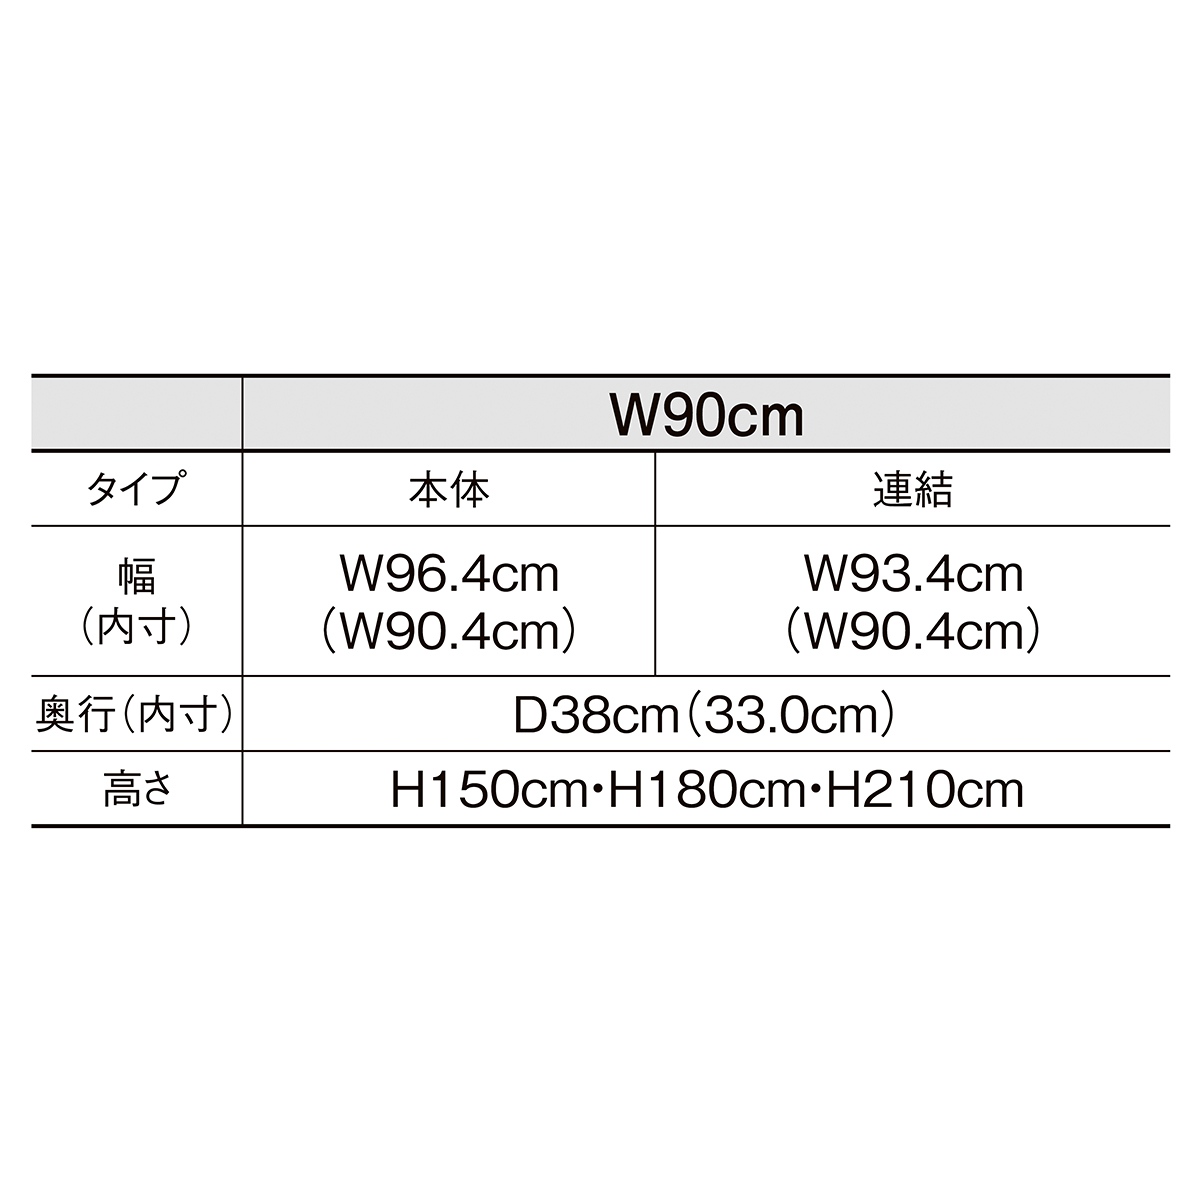 TR W90cm 本体 ブラック H150cm 【通販】ストア・エキスプレス